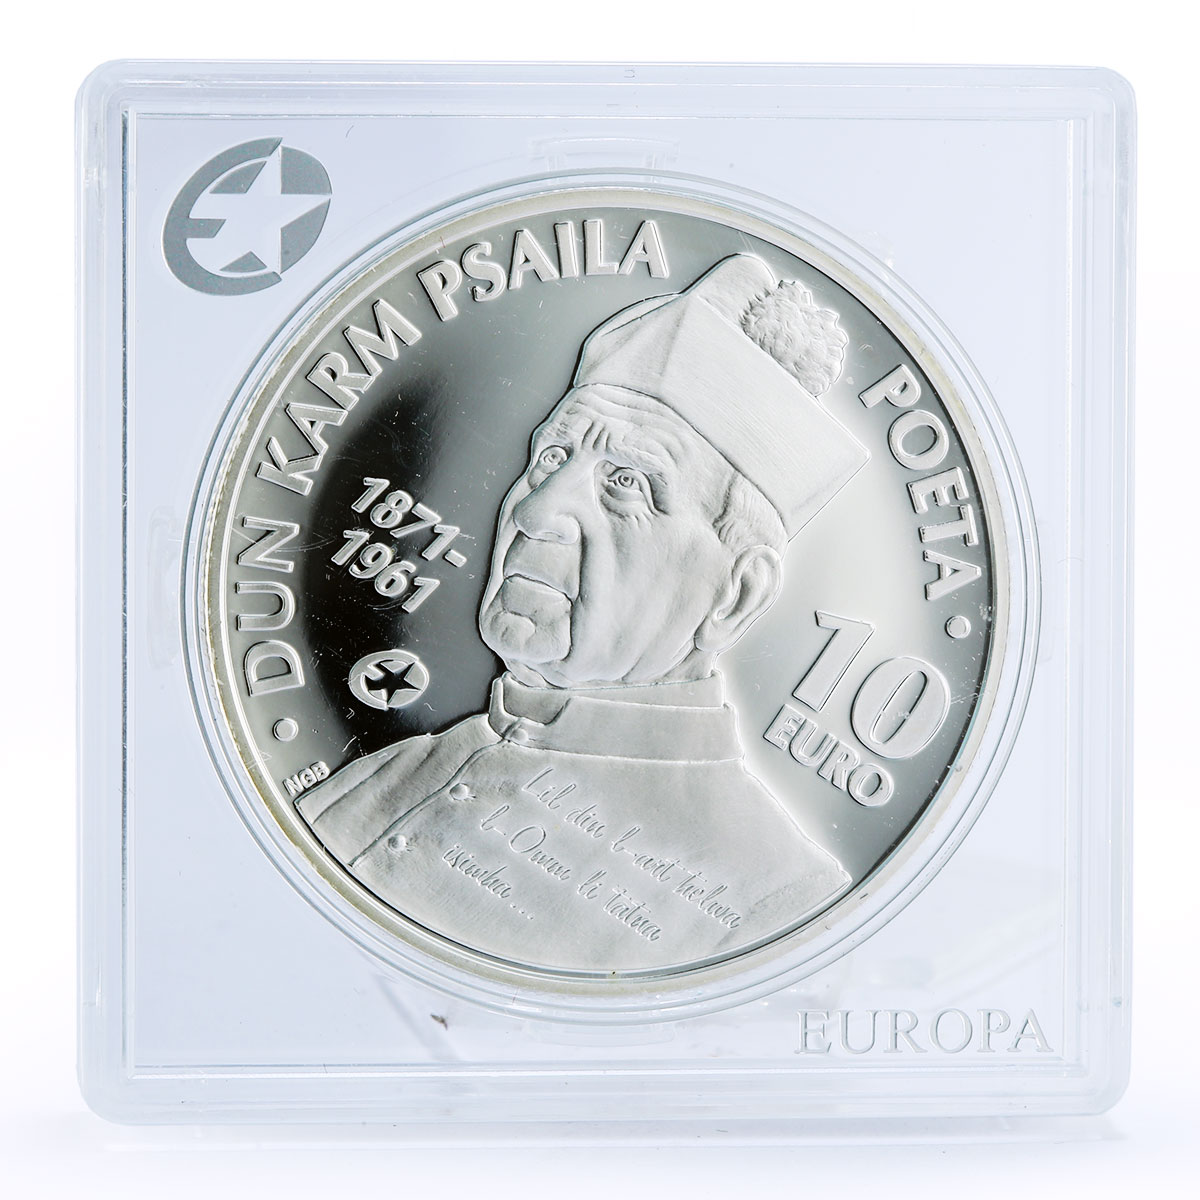 Malta 10 euro Poet Dum Karm Psaila Poetry Literature proof silver coin 2013